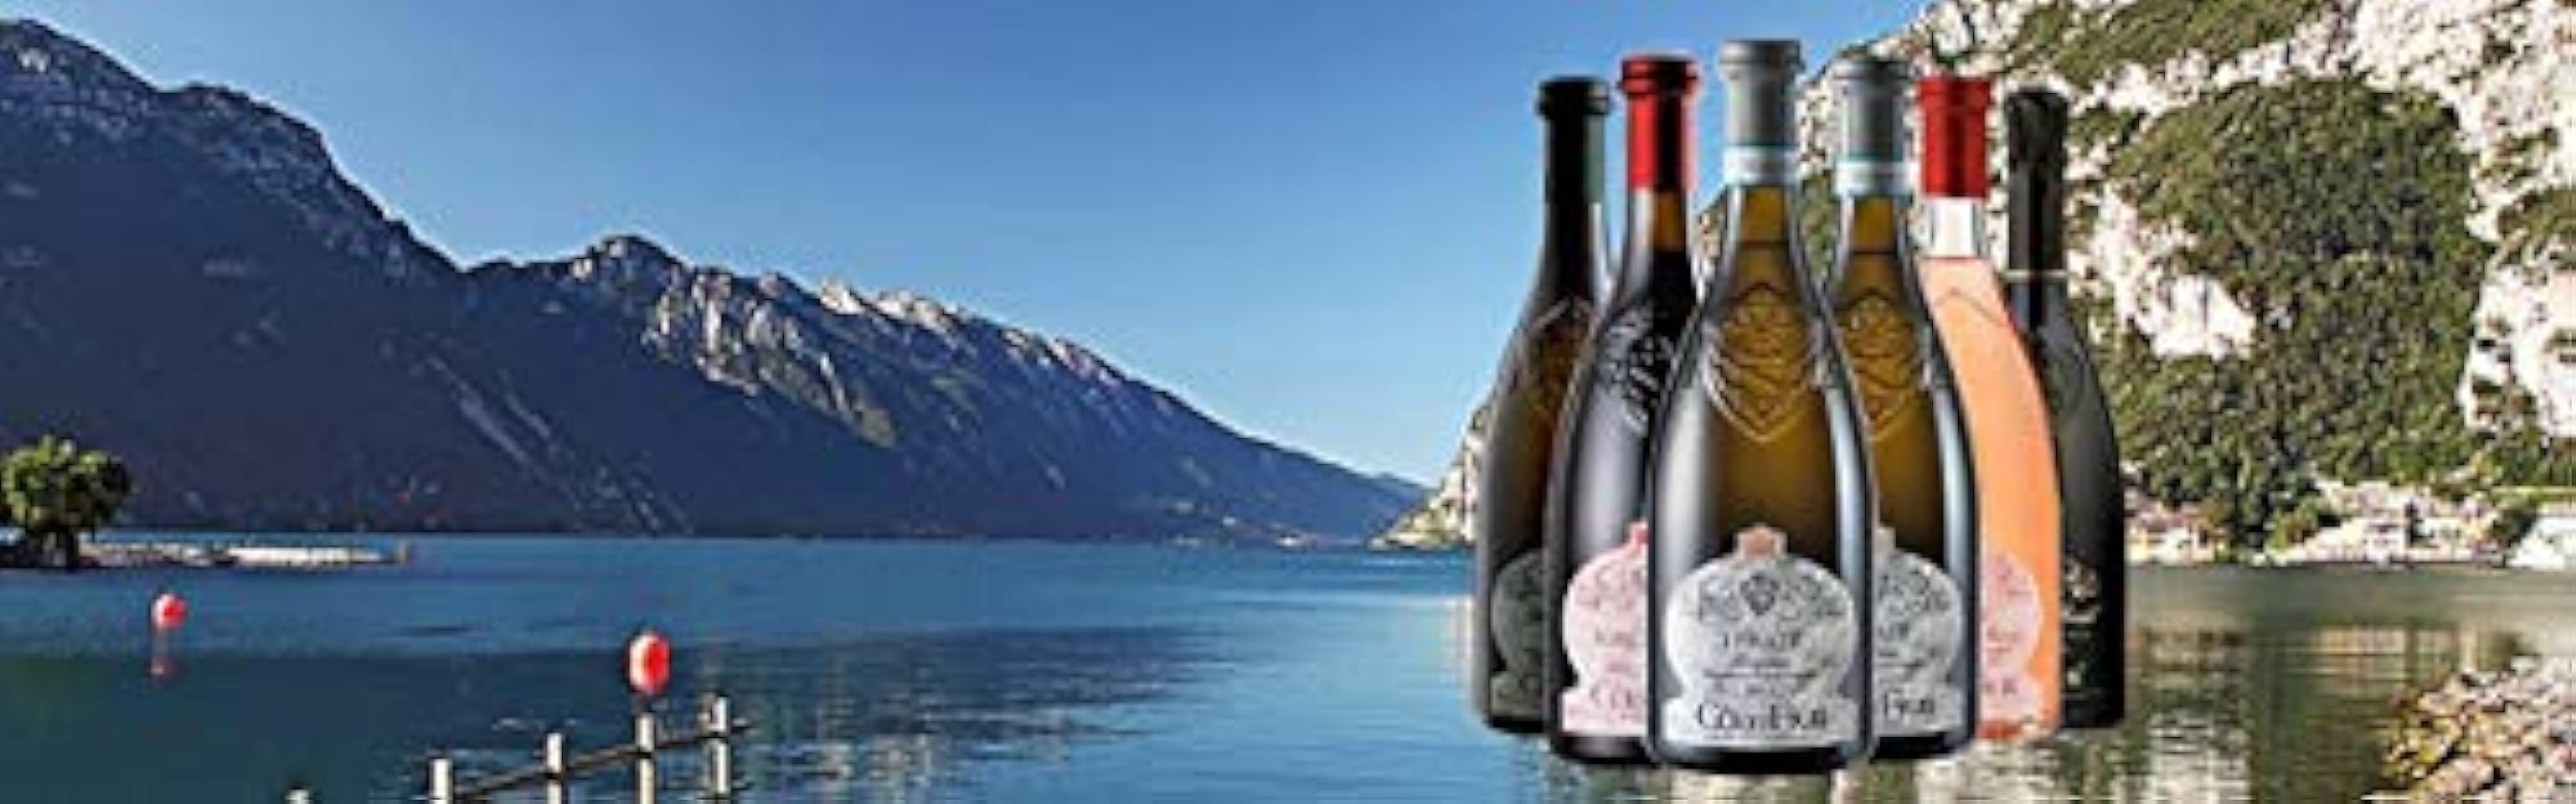 Vino Rosato - Rosa dei Frati Riviera del Garda classico Doc - Az.Agr. Cà dei Frati 6 bottiglie 602831062